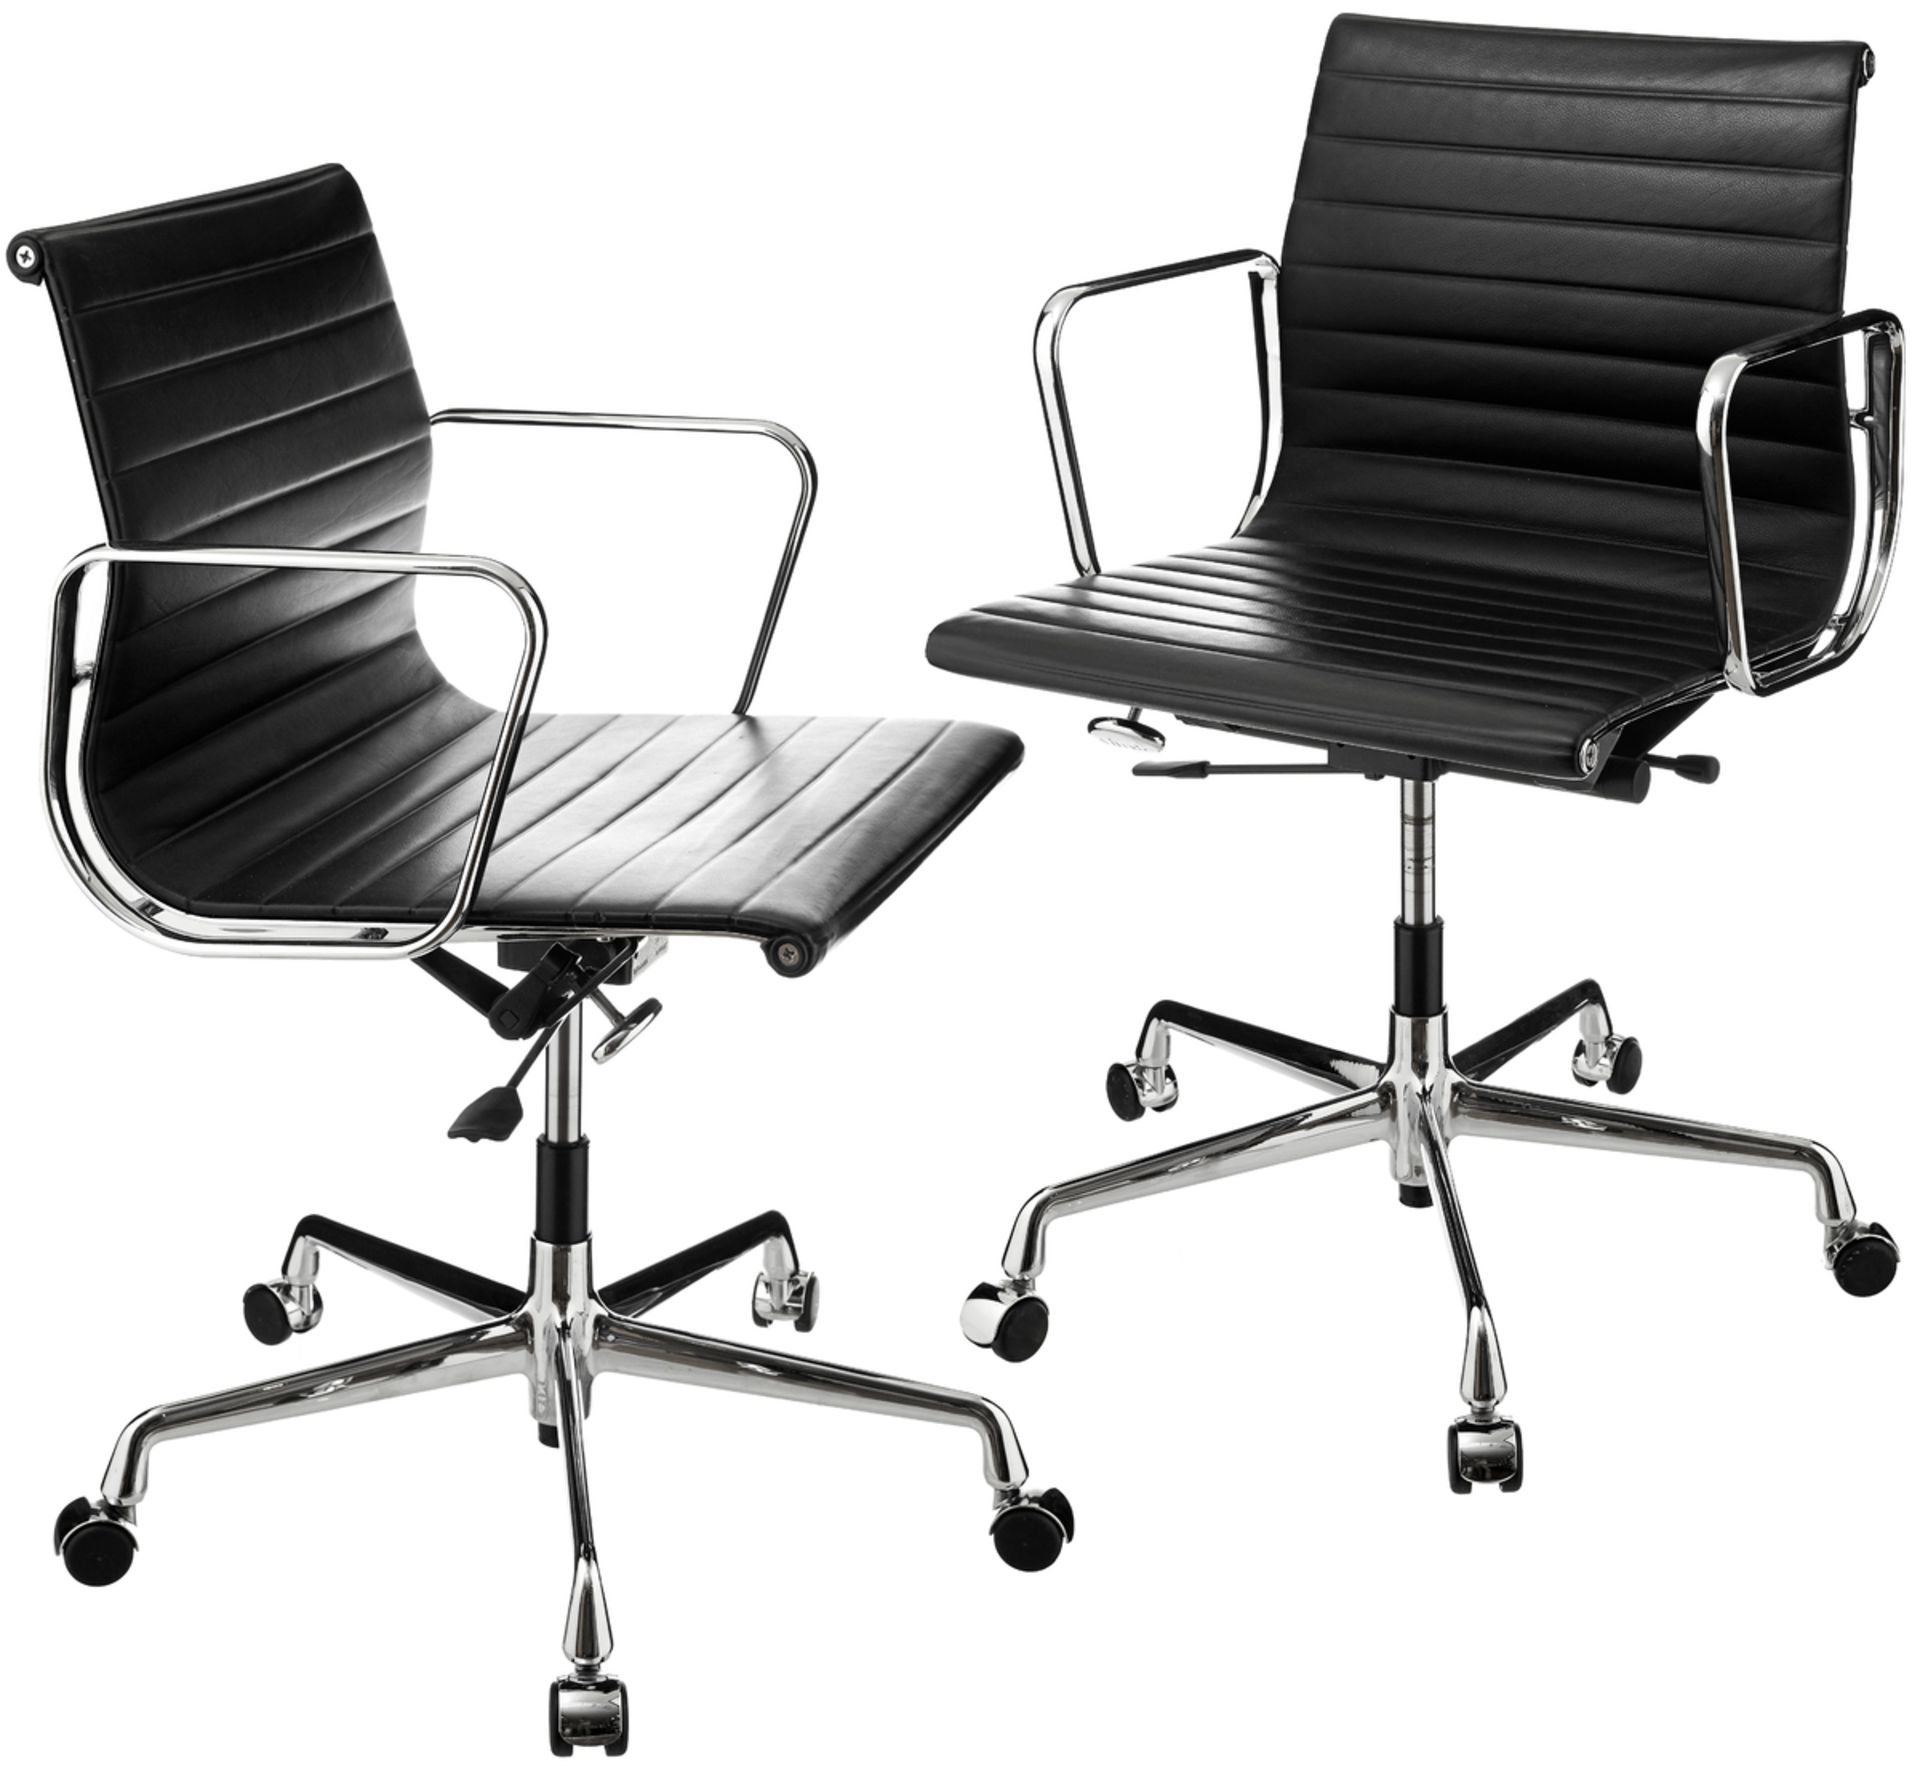 Paar Bürostühle "EA117"Entwurf 1958 Charles & Ray Eames für Herman Miller. Drehbares, poliertes